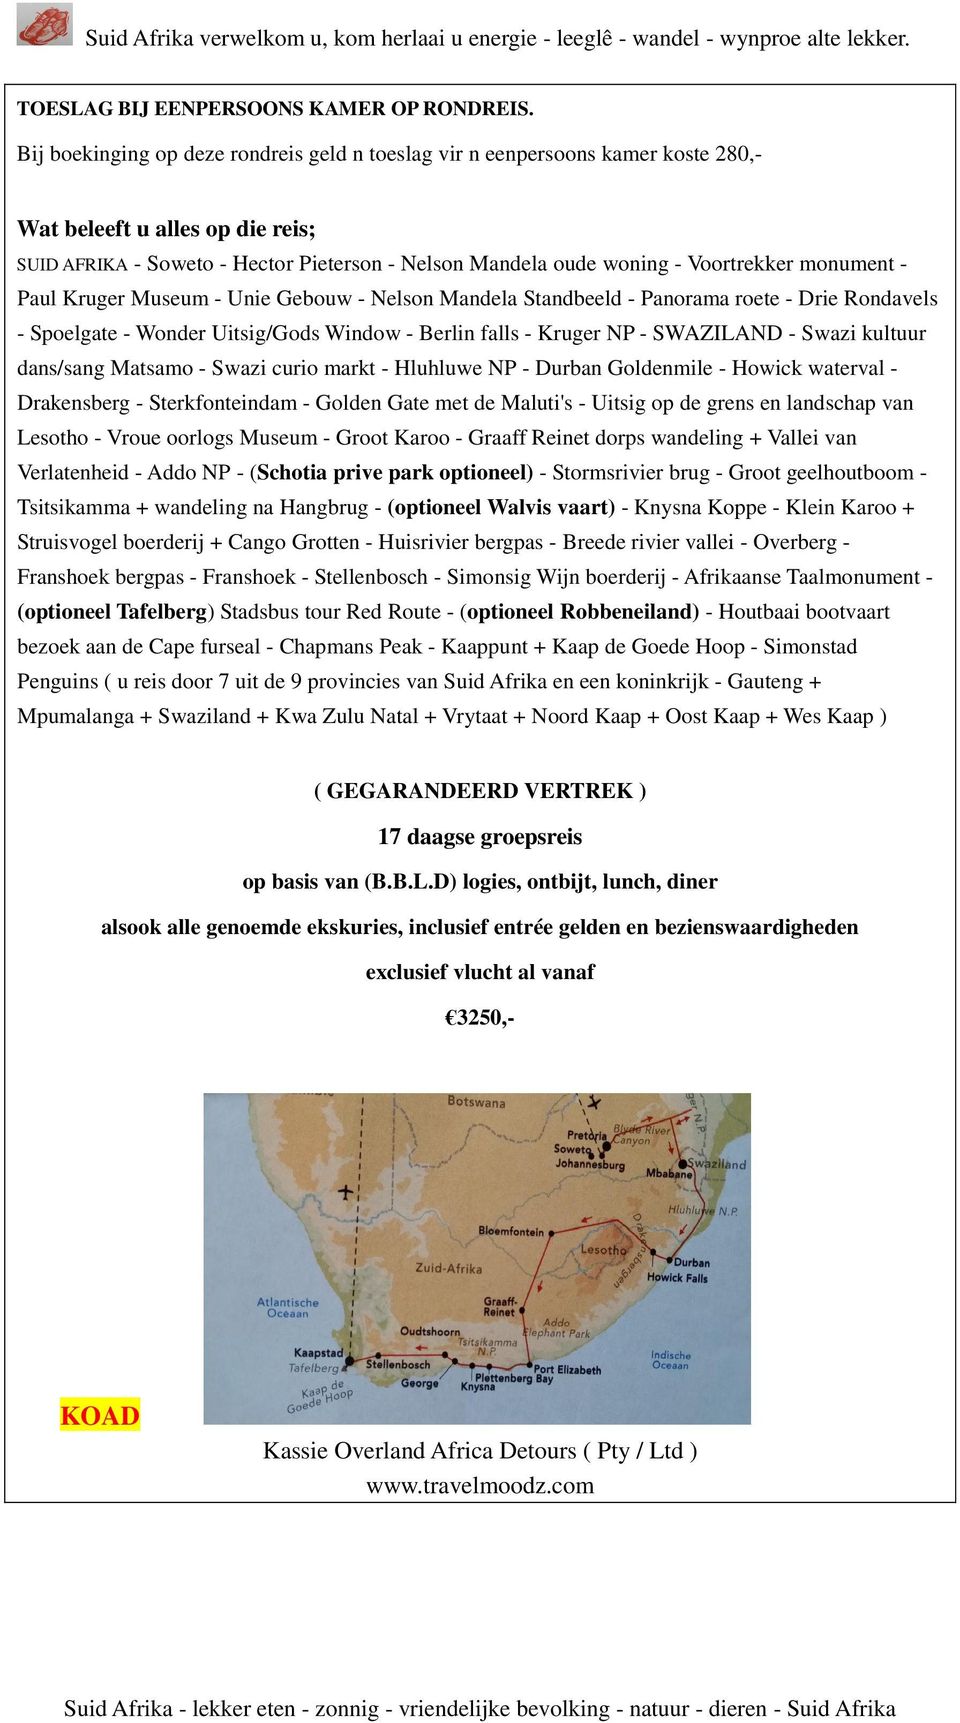 monument - Paul Kruger Museum - Unie Gebouw - Nelson Mandela Standbeeld - Panorama roete - Drie Rondavels - Spoelgate - Wonder Uitsig/Gods Window - Berlin falls - Kruger NP - SWAZILAND - Swazi